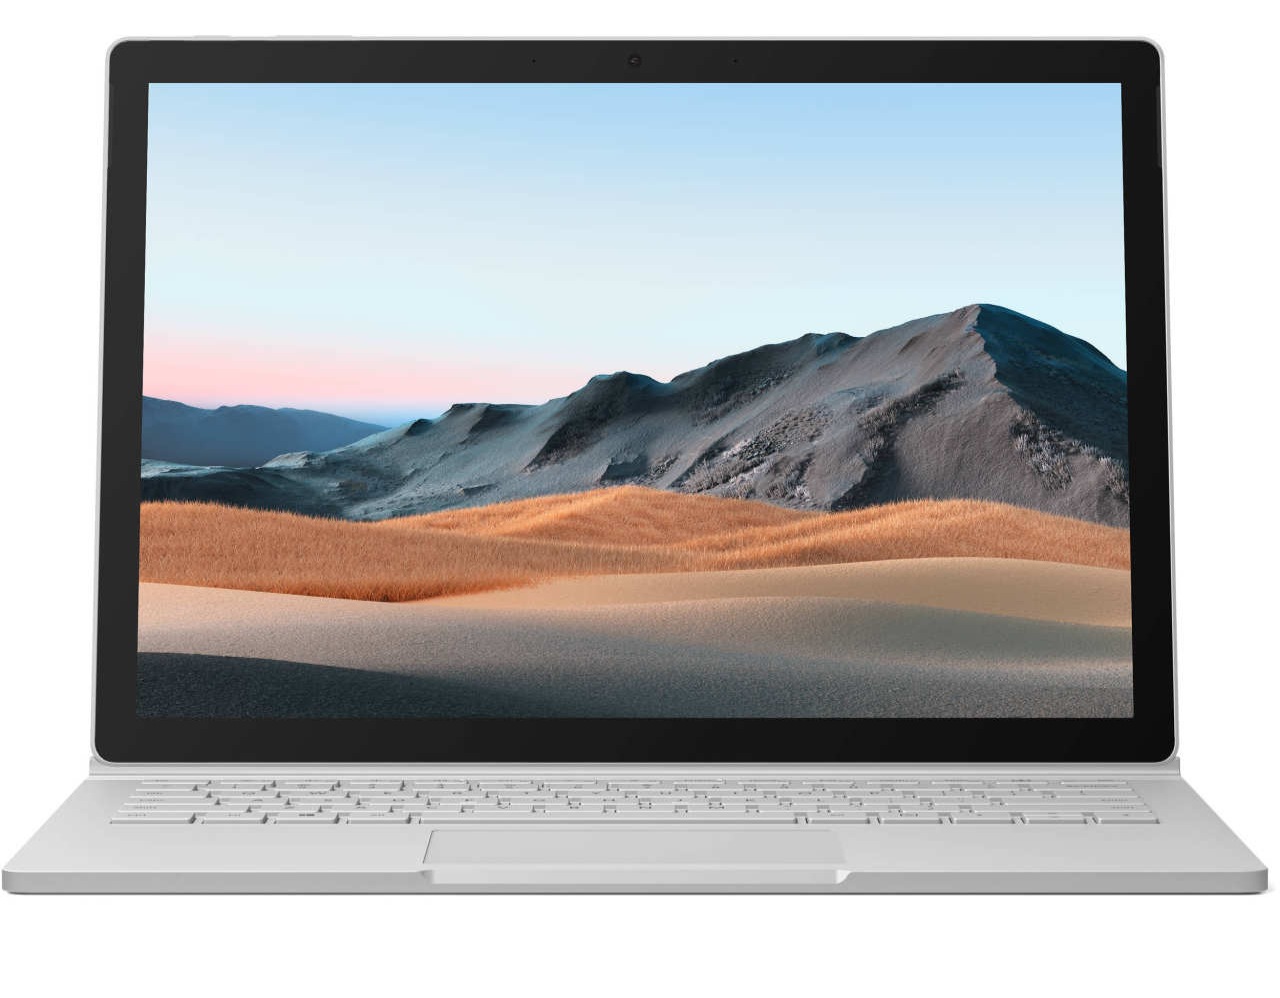 لپ تاپ - Laptop   مايكروسافت-Microsoft Surface Book 3 - Core i7 -32GB-1TB -4GB -13.5 INCH